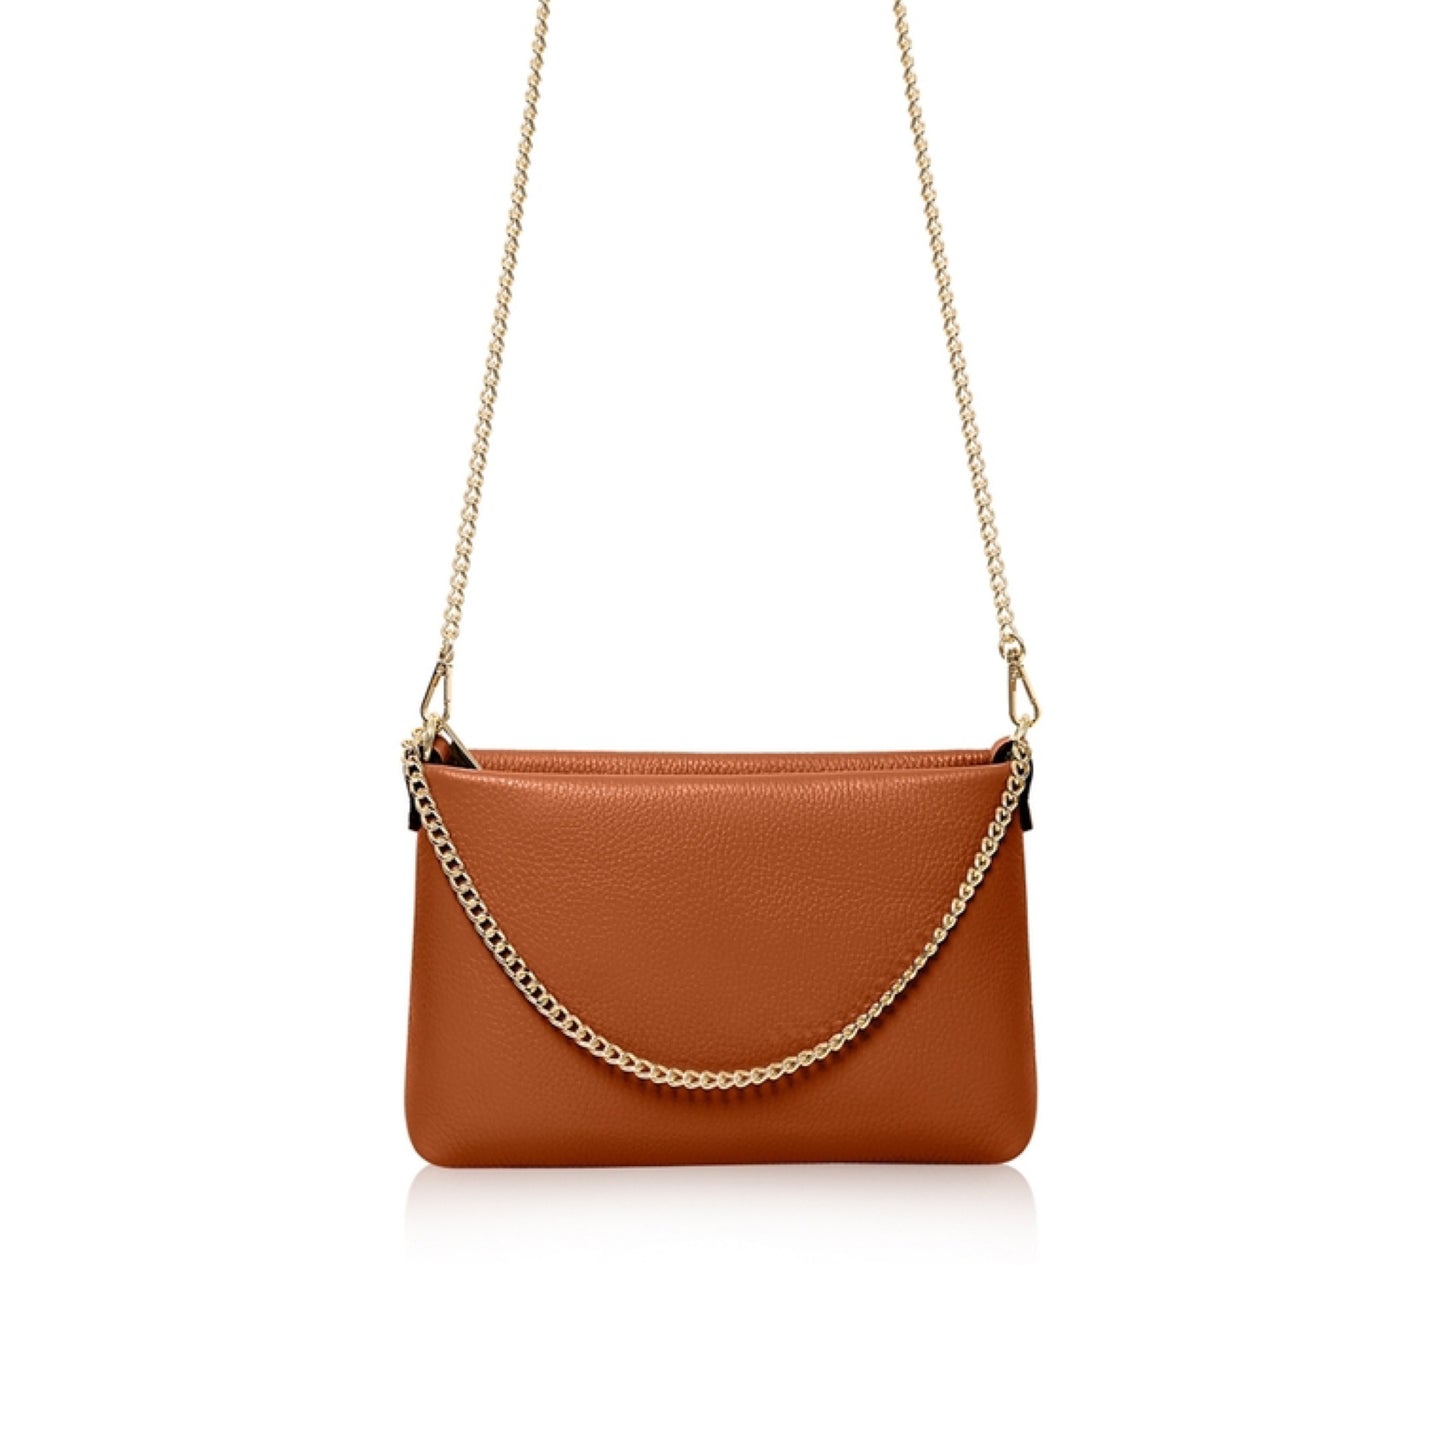 Chloe - gold chain leather handbag